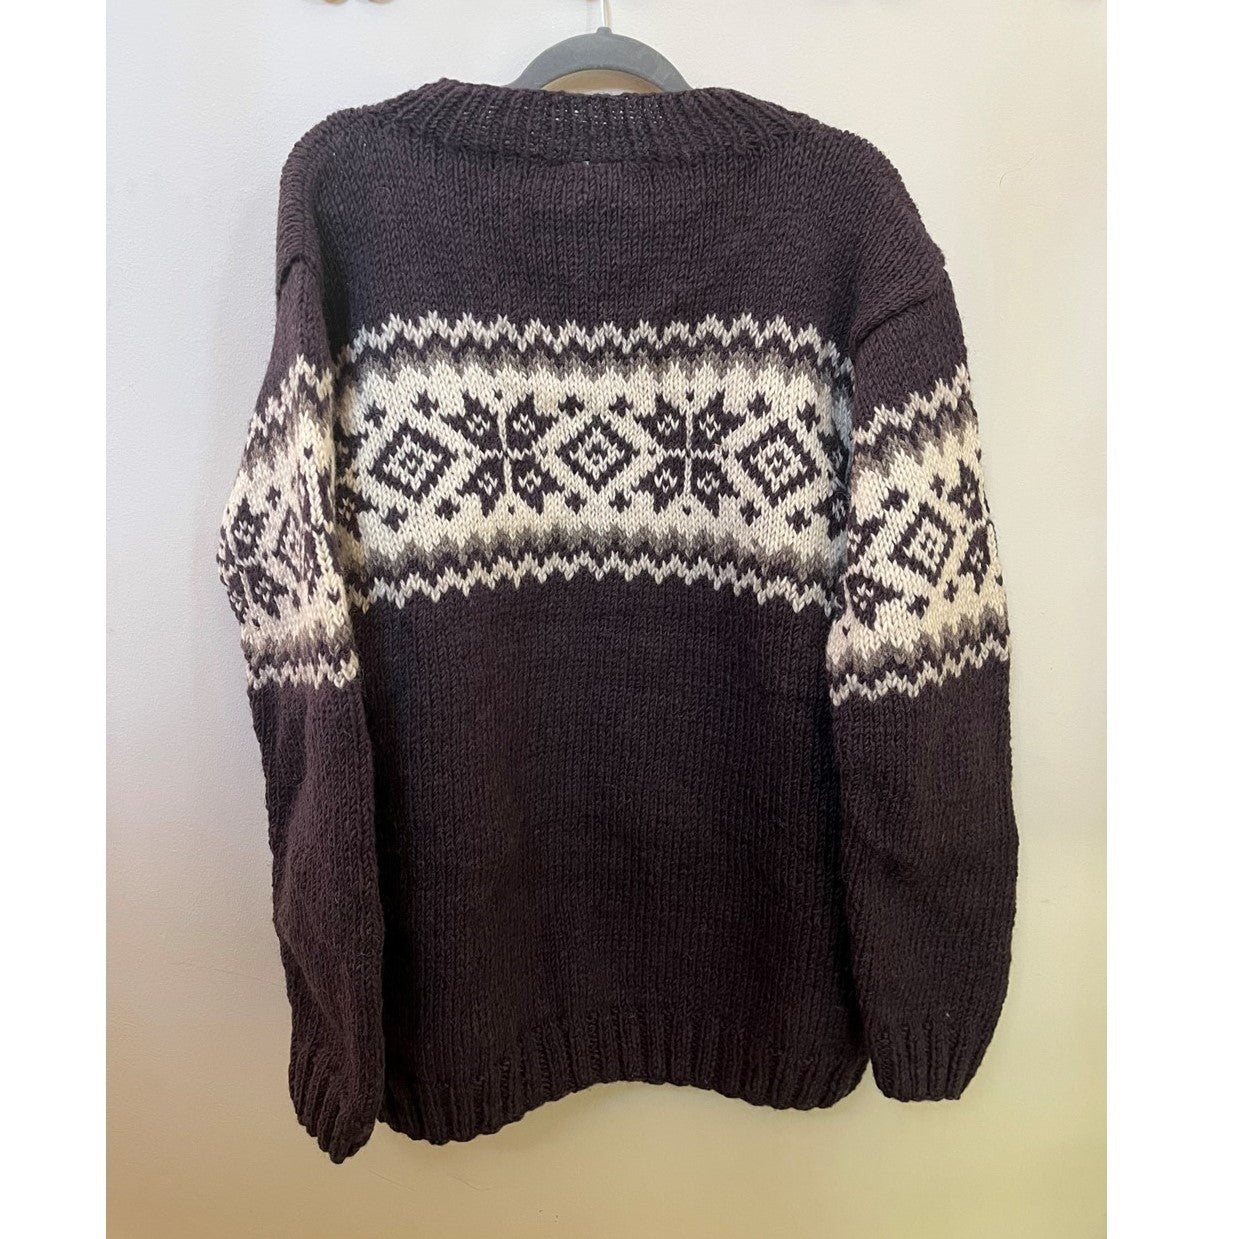 Yukon Sweater in Charcoal - Unisex